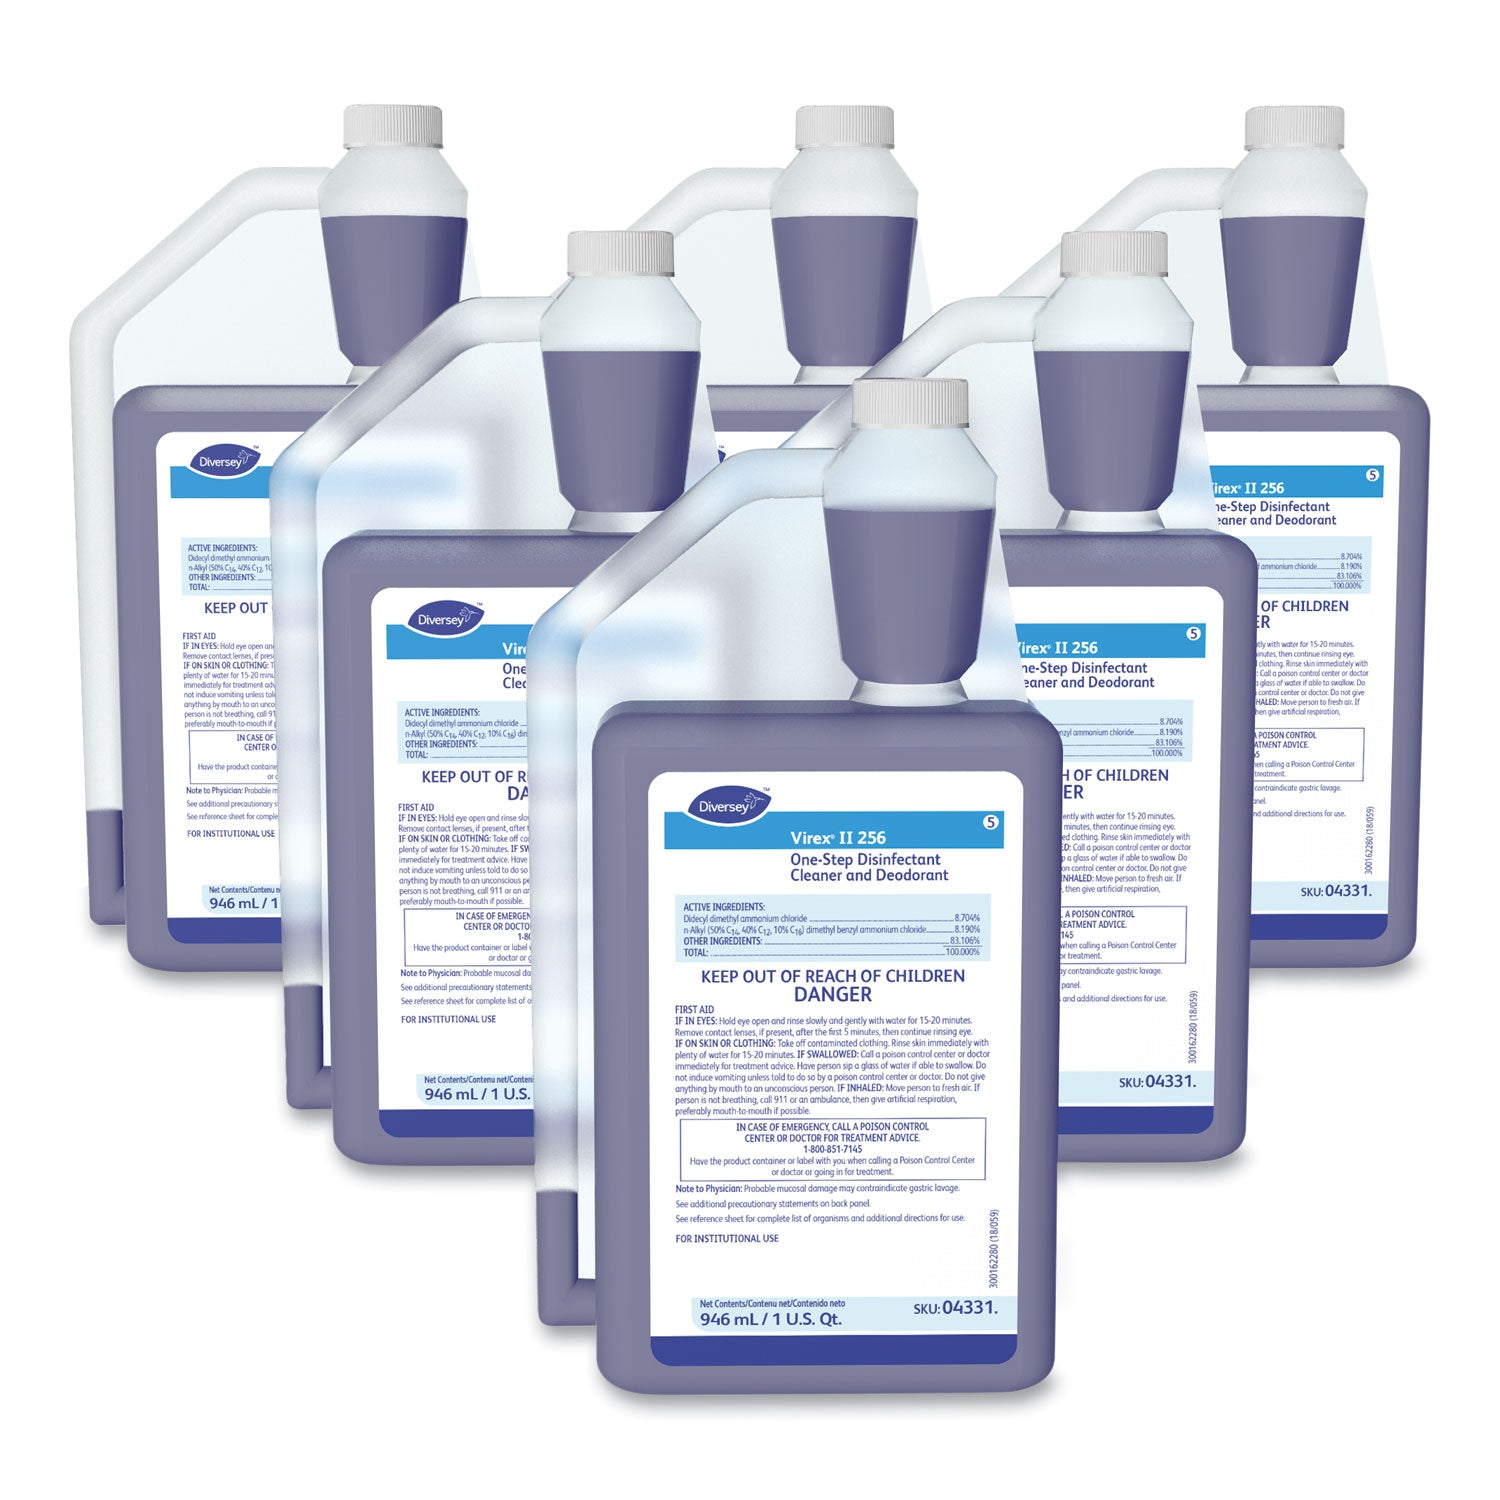 virex-ii-256-one-step-disinfectant-cleaner-deodorant-mint-32oz-bottle6-crtn_dvs04331 - 5